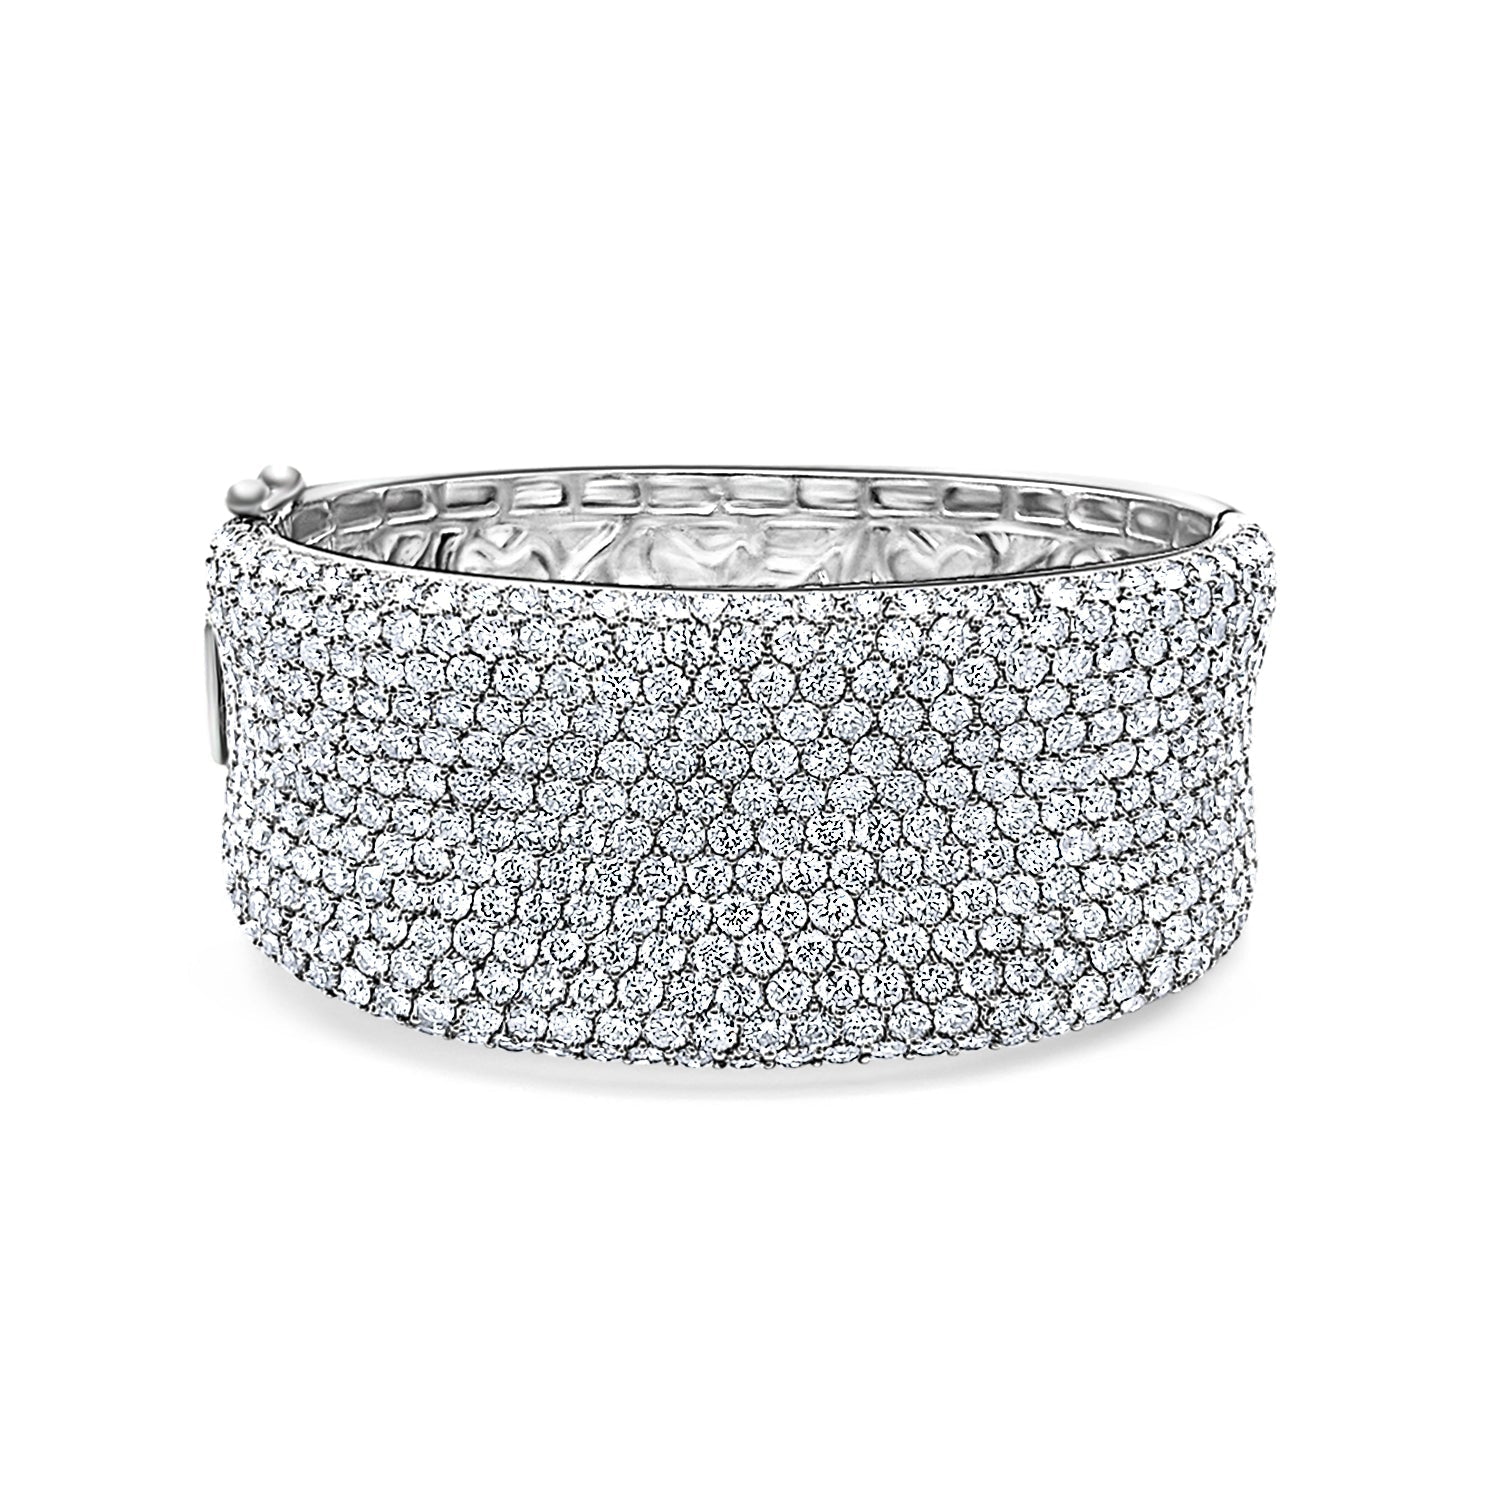 Vintage 20.40 CTW Round Cut Diamond Encrusted 18K White Gold Bangle Bracelet-Bracelet-ASSAY